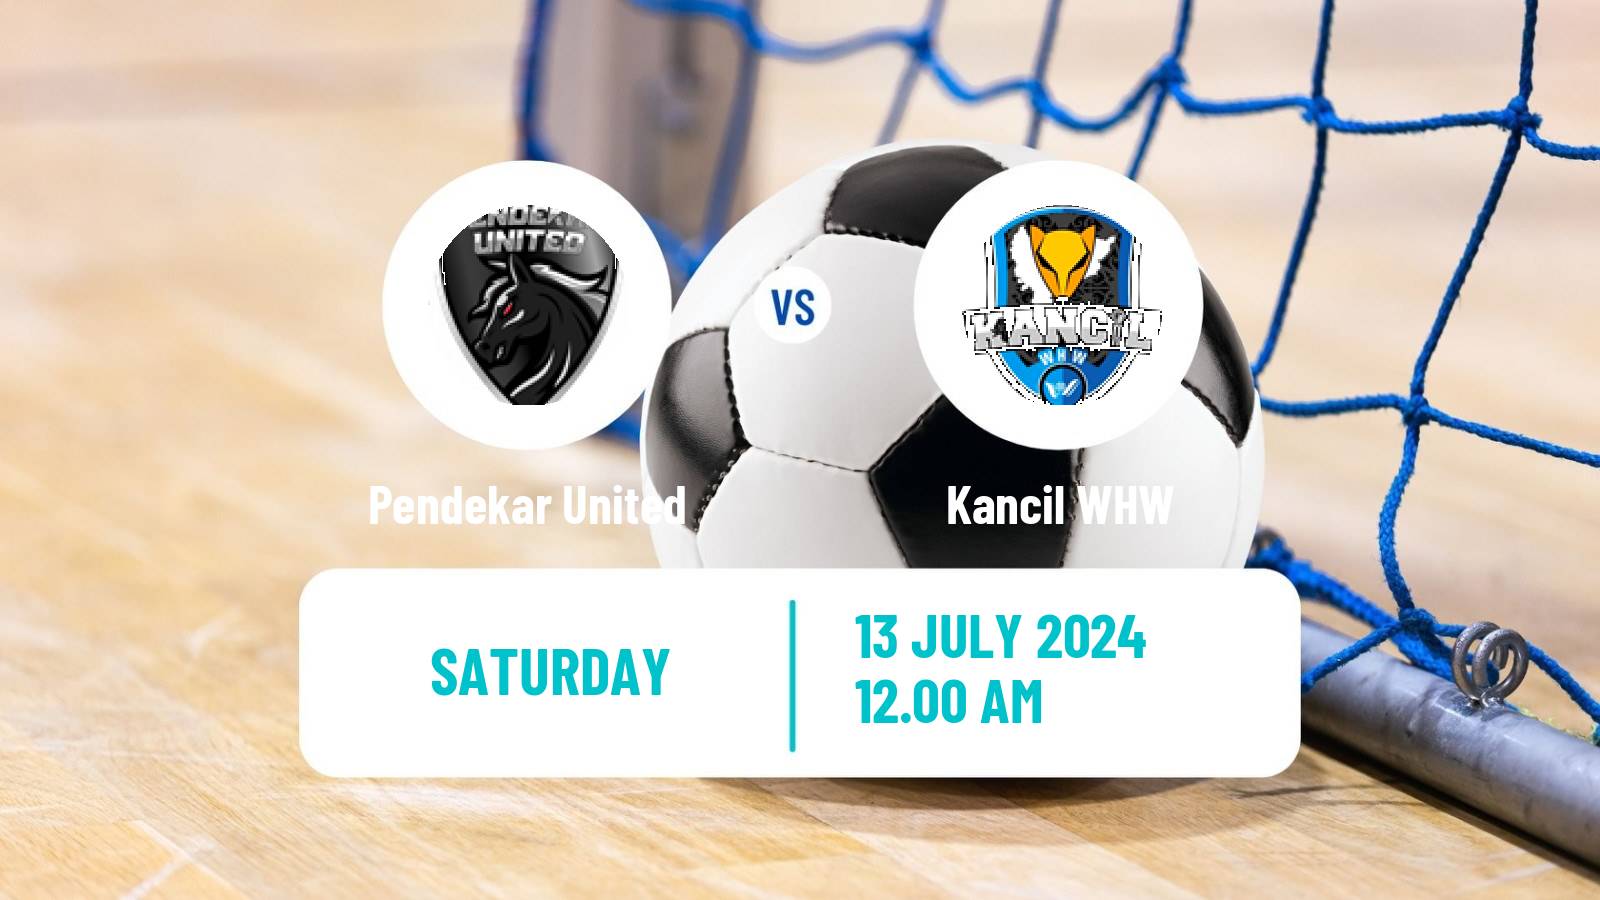 Futsal Indonesian Pro Futsal League Pendekar United - Kancil WHW